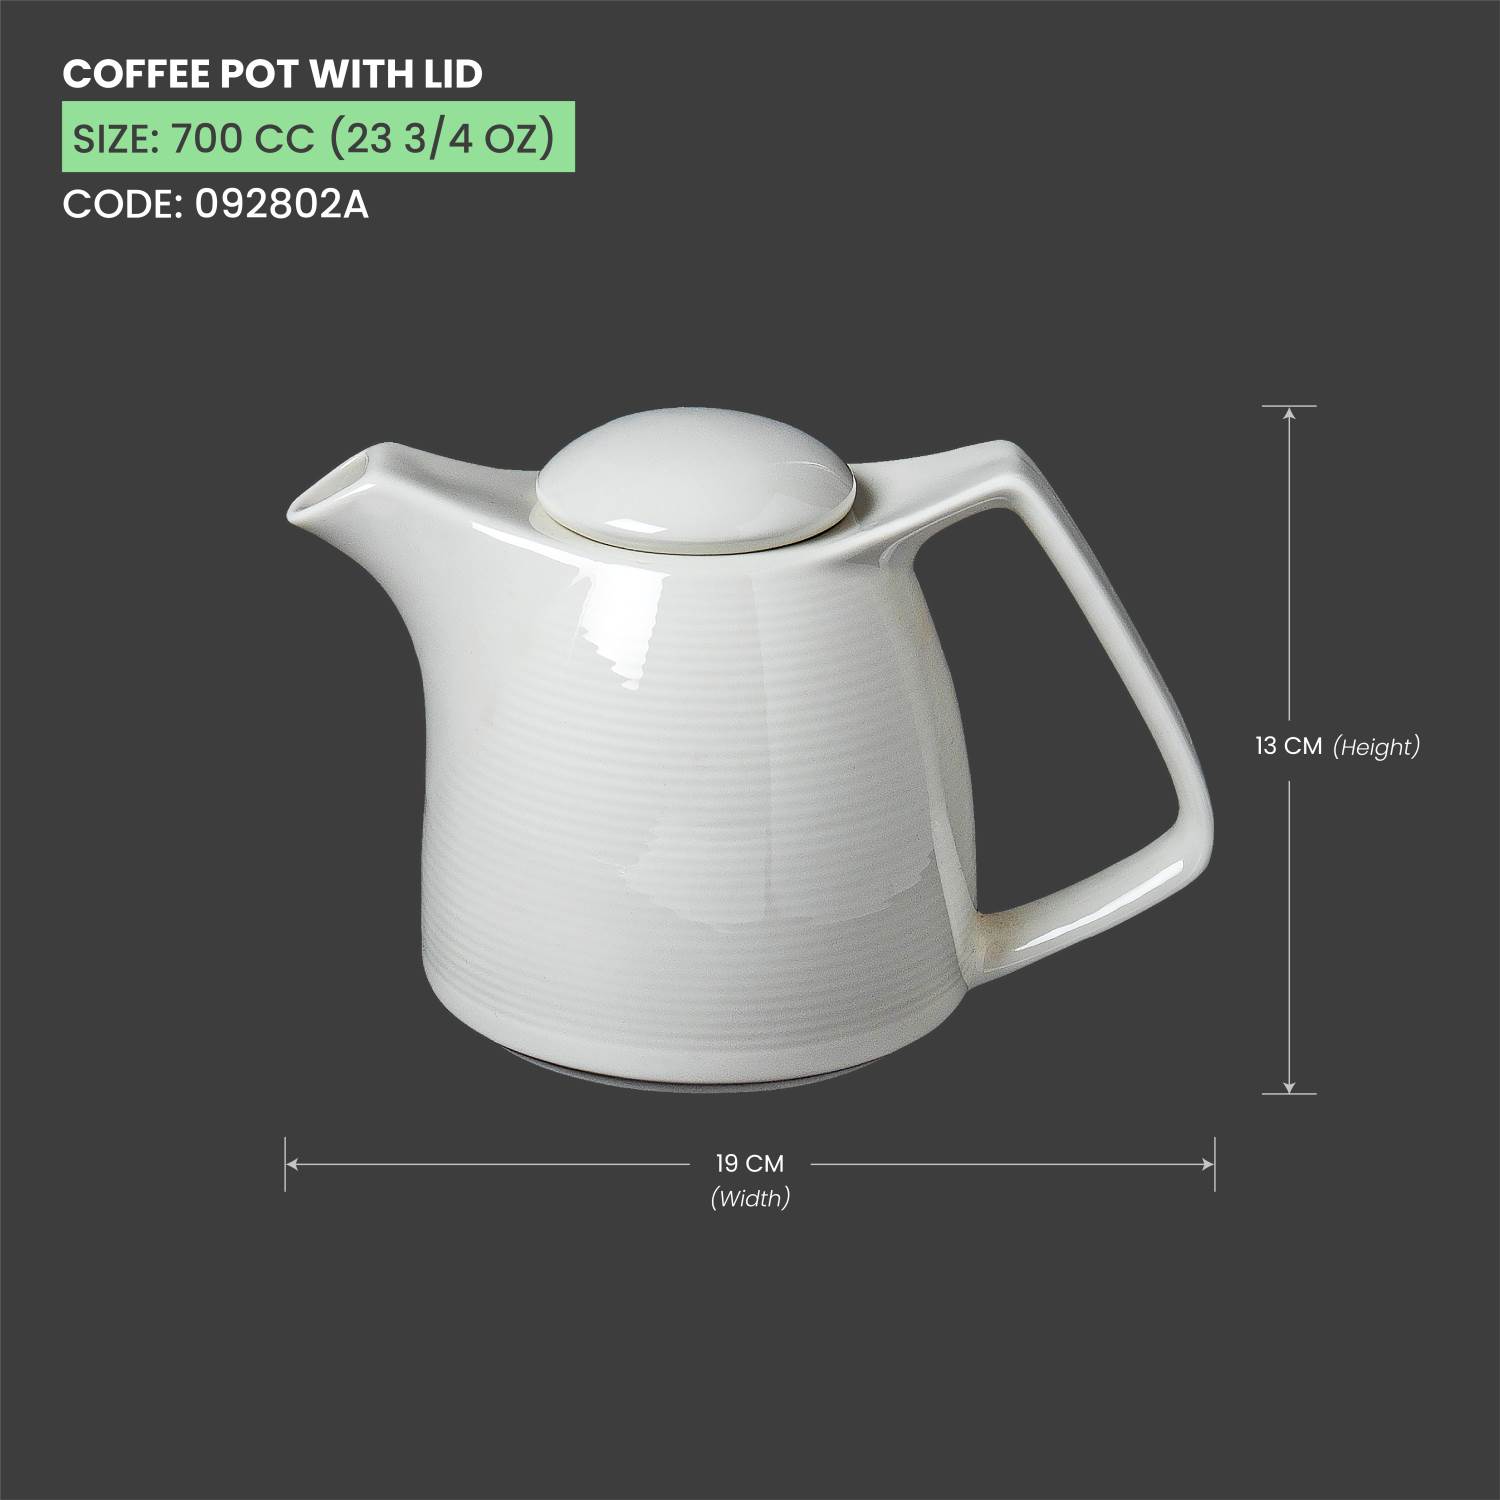 Baralee Wish Coffee Pot With Lid 700 Cc (23 3/4 Oz)